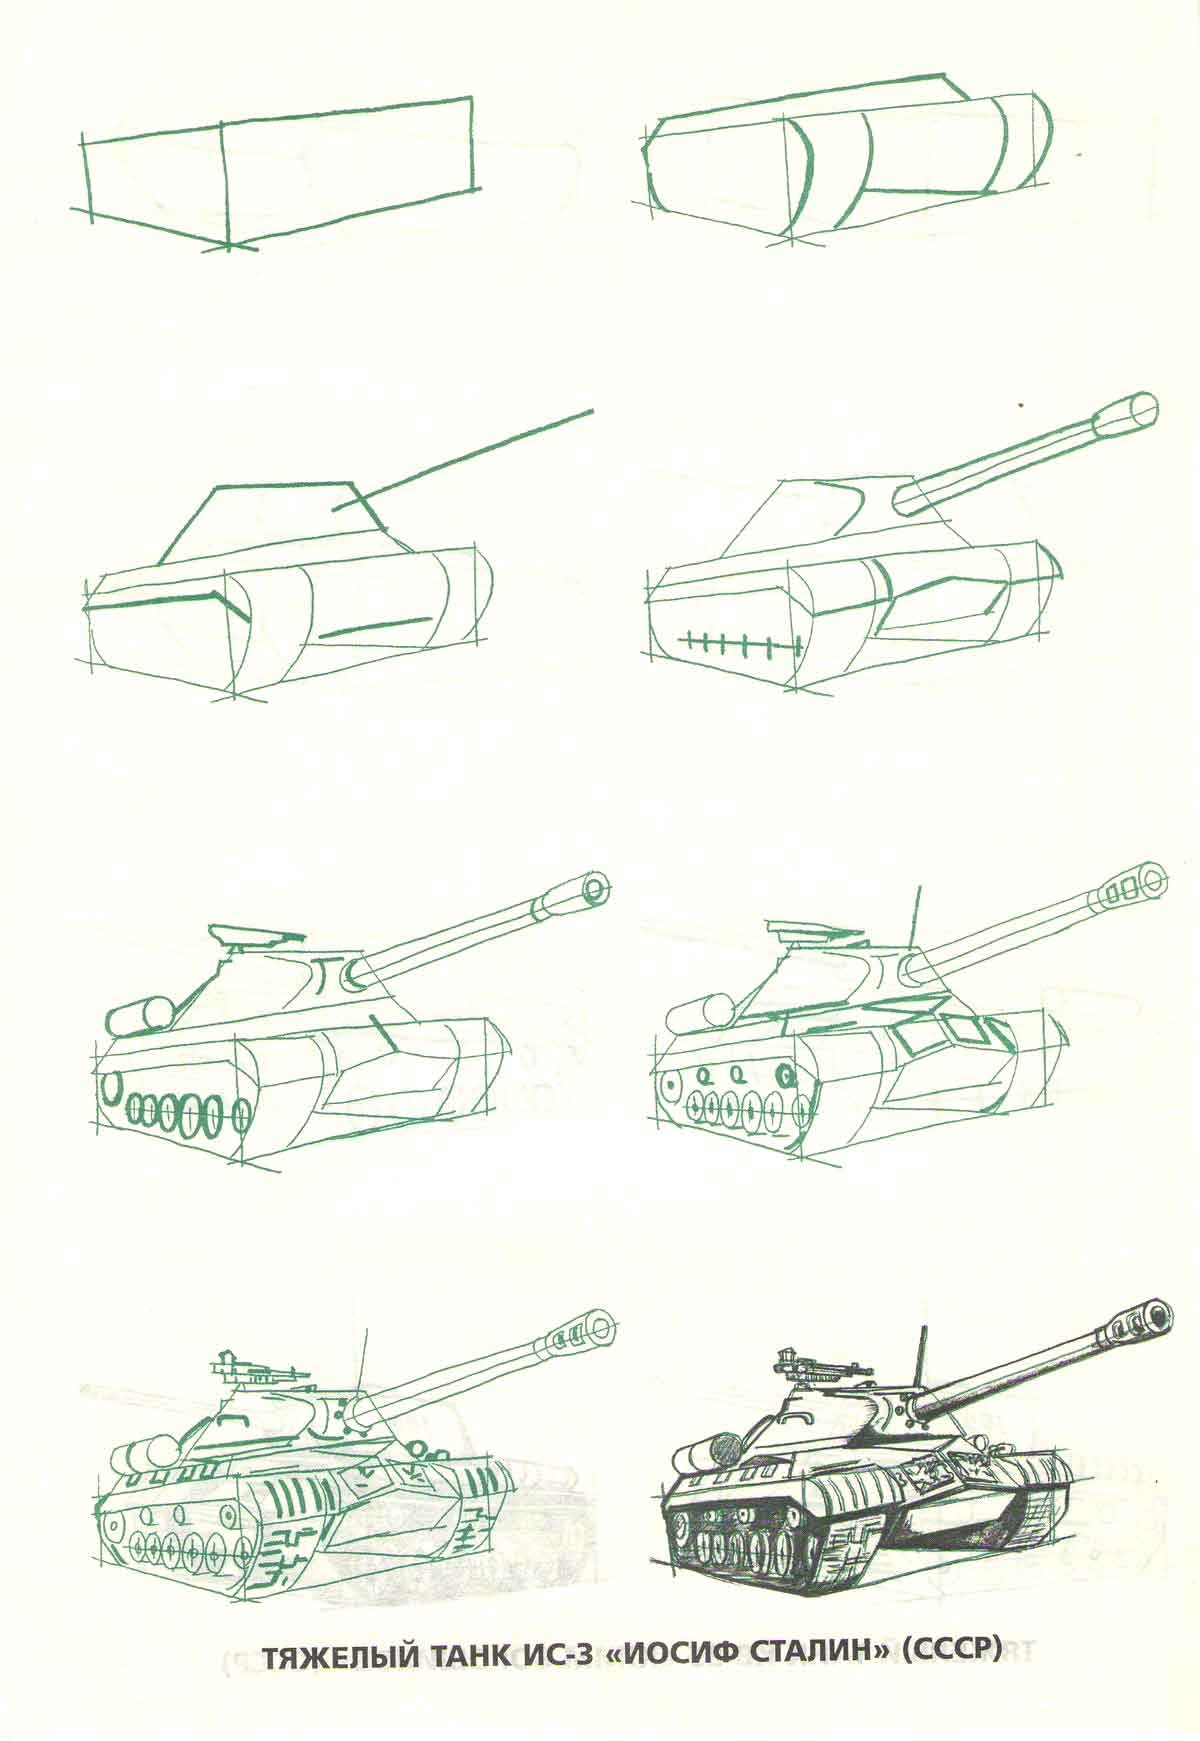 Легкая картинка танка. Т34 танк рисунок пошагово. Танк т-34 поэтапно. Рисунок танка ИС 3. Танк т-34 рисунок.